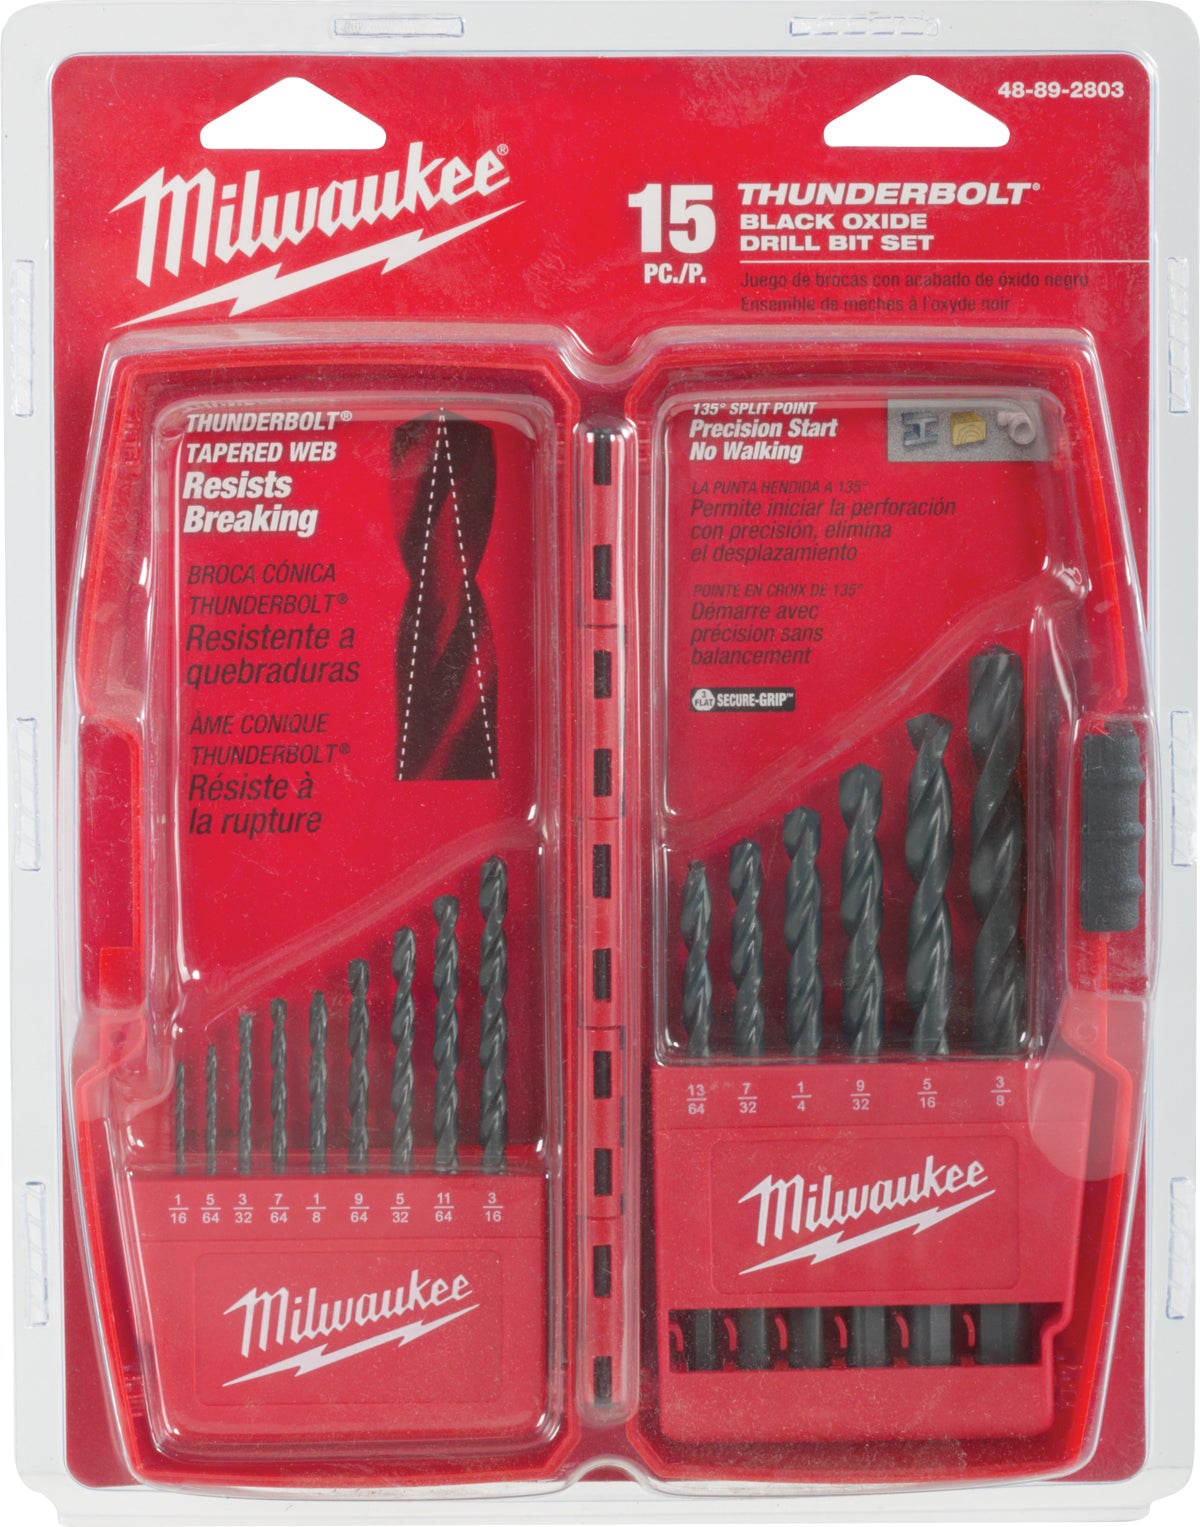 Buy Milwaukee Thunderbolt 15-Piece Black Oxide Drill Bit Set